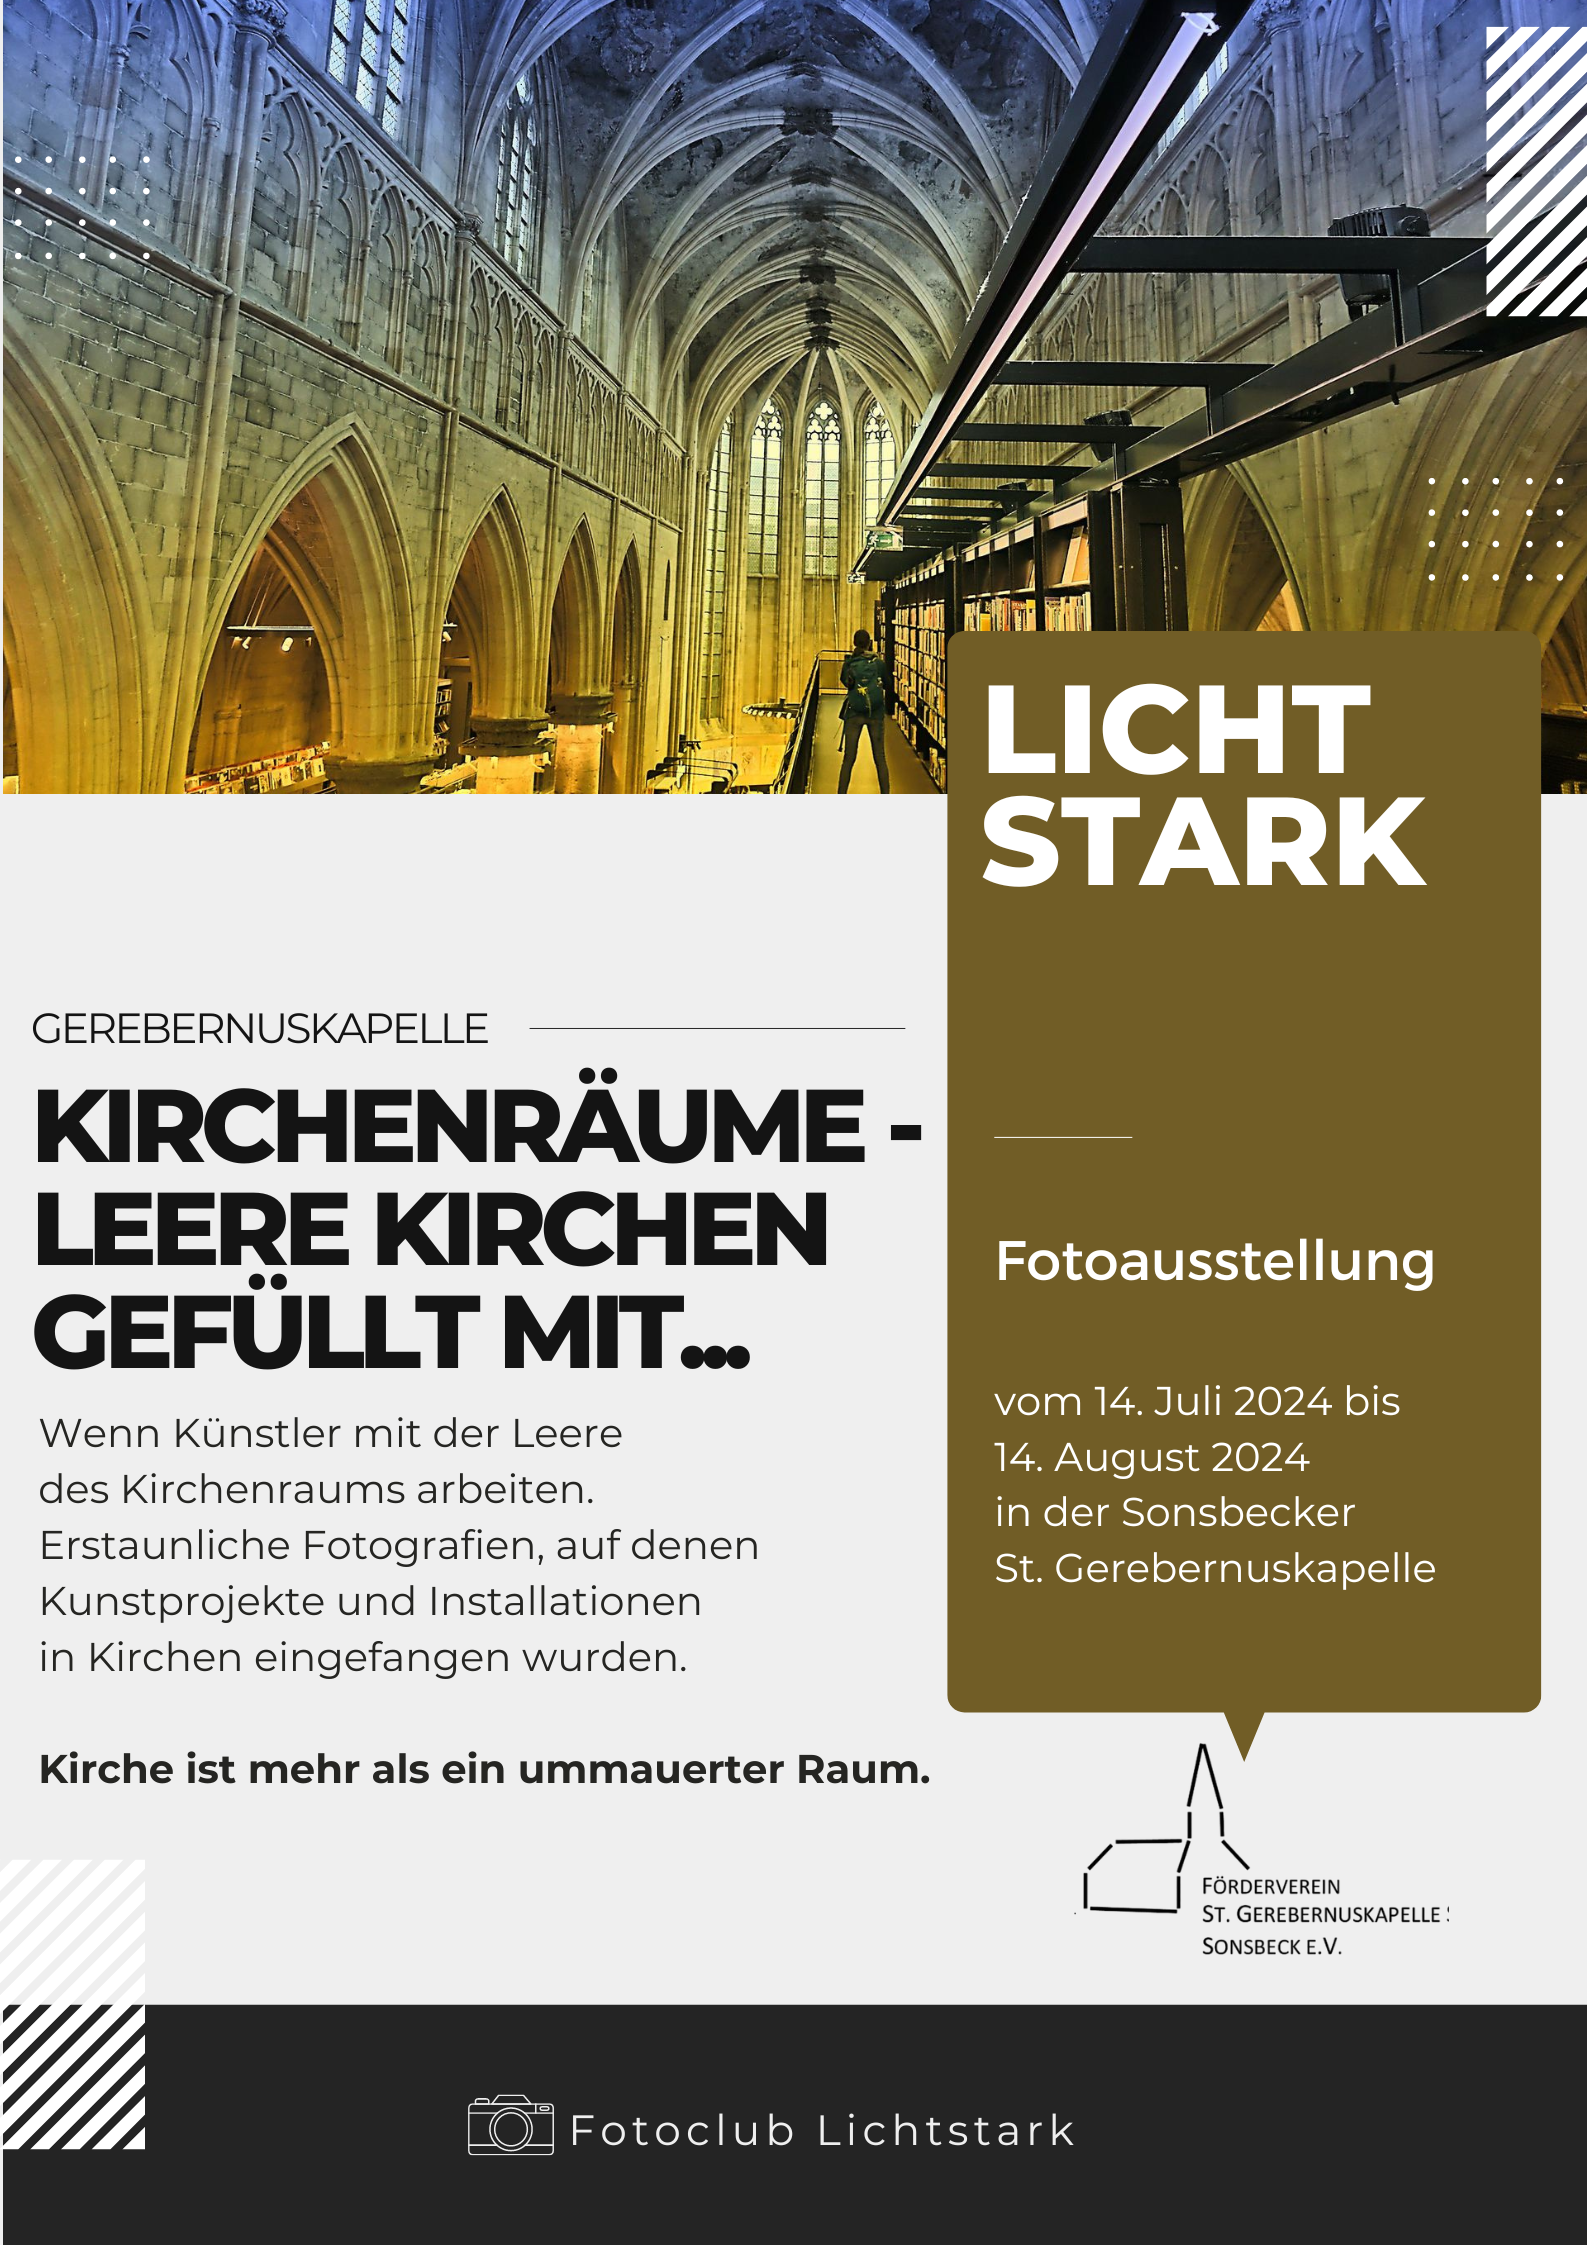 2407 Lichtstark Fotoausstellung Poster